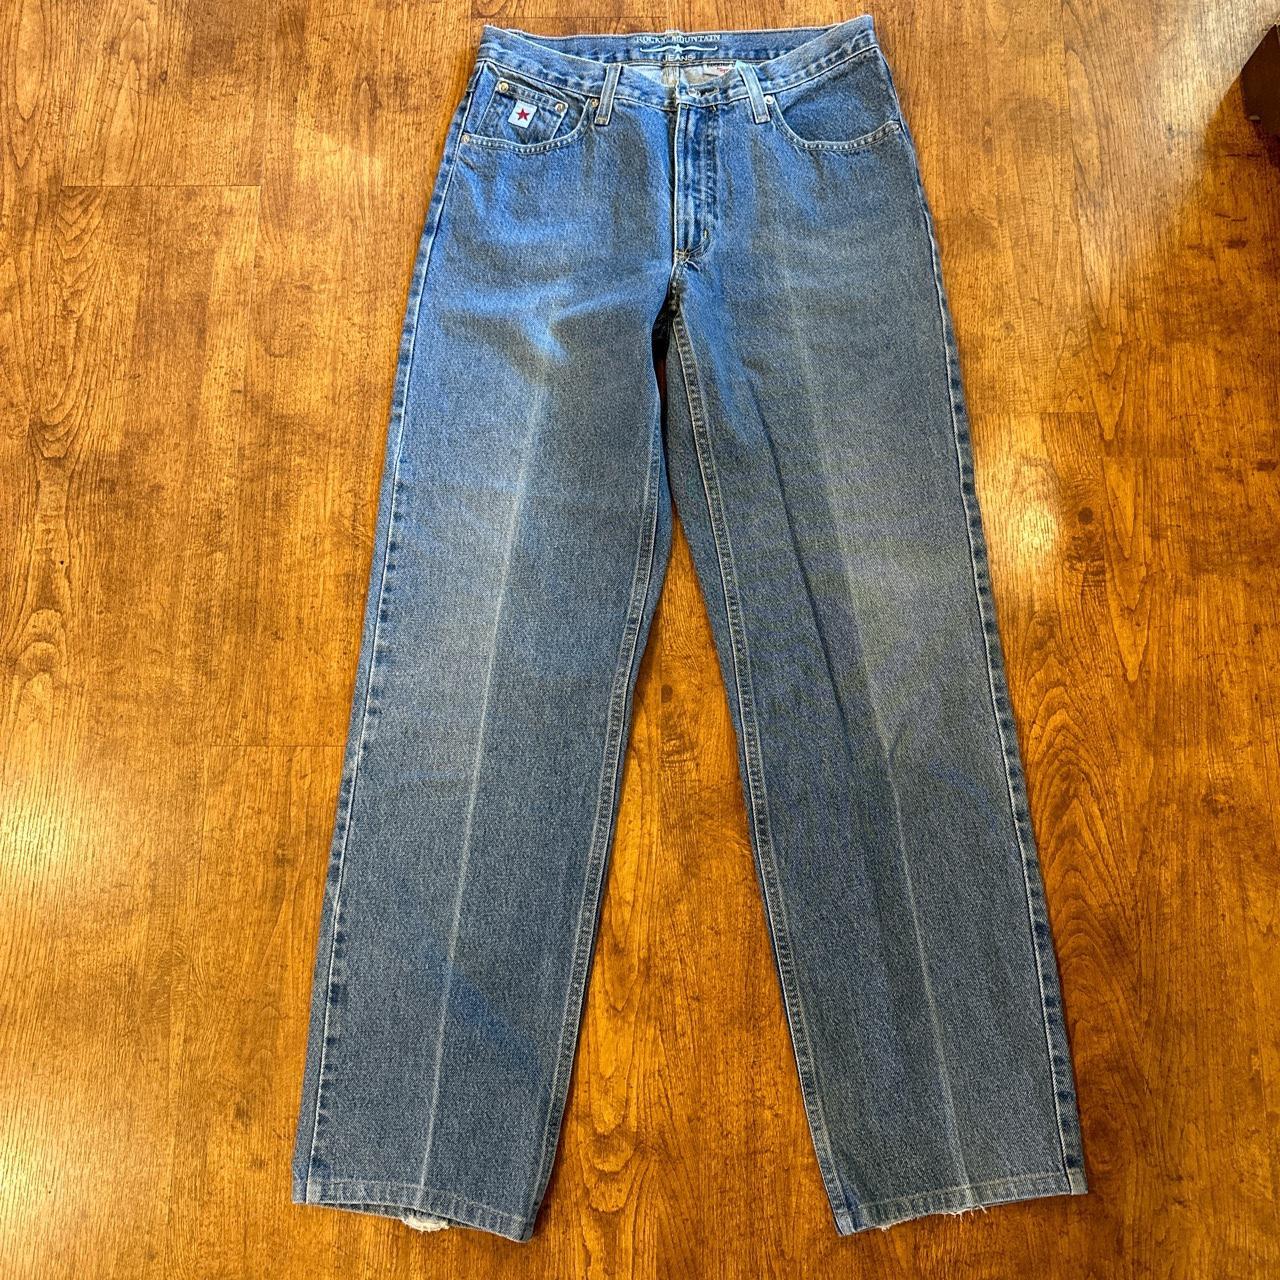 Vintage denim jeans Rockies Size 11 xl Waist 30... - Depop